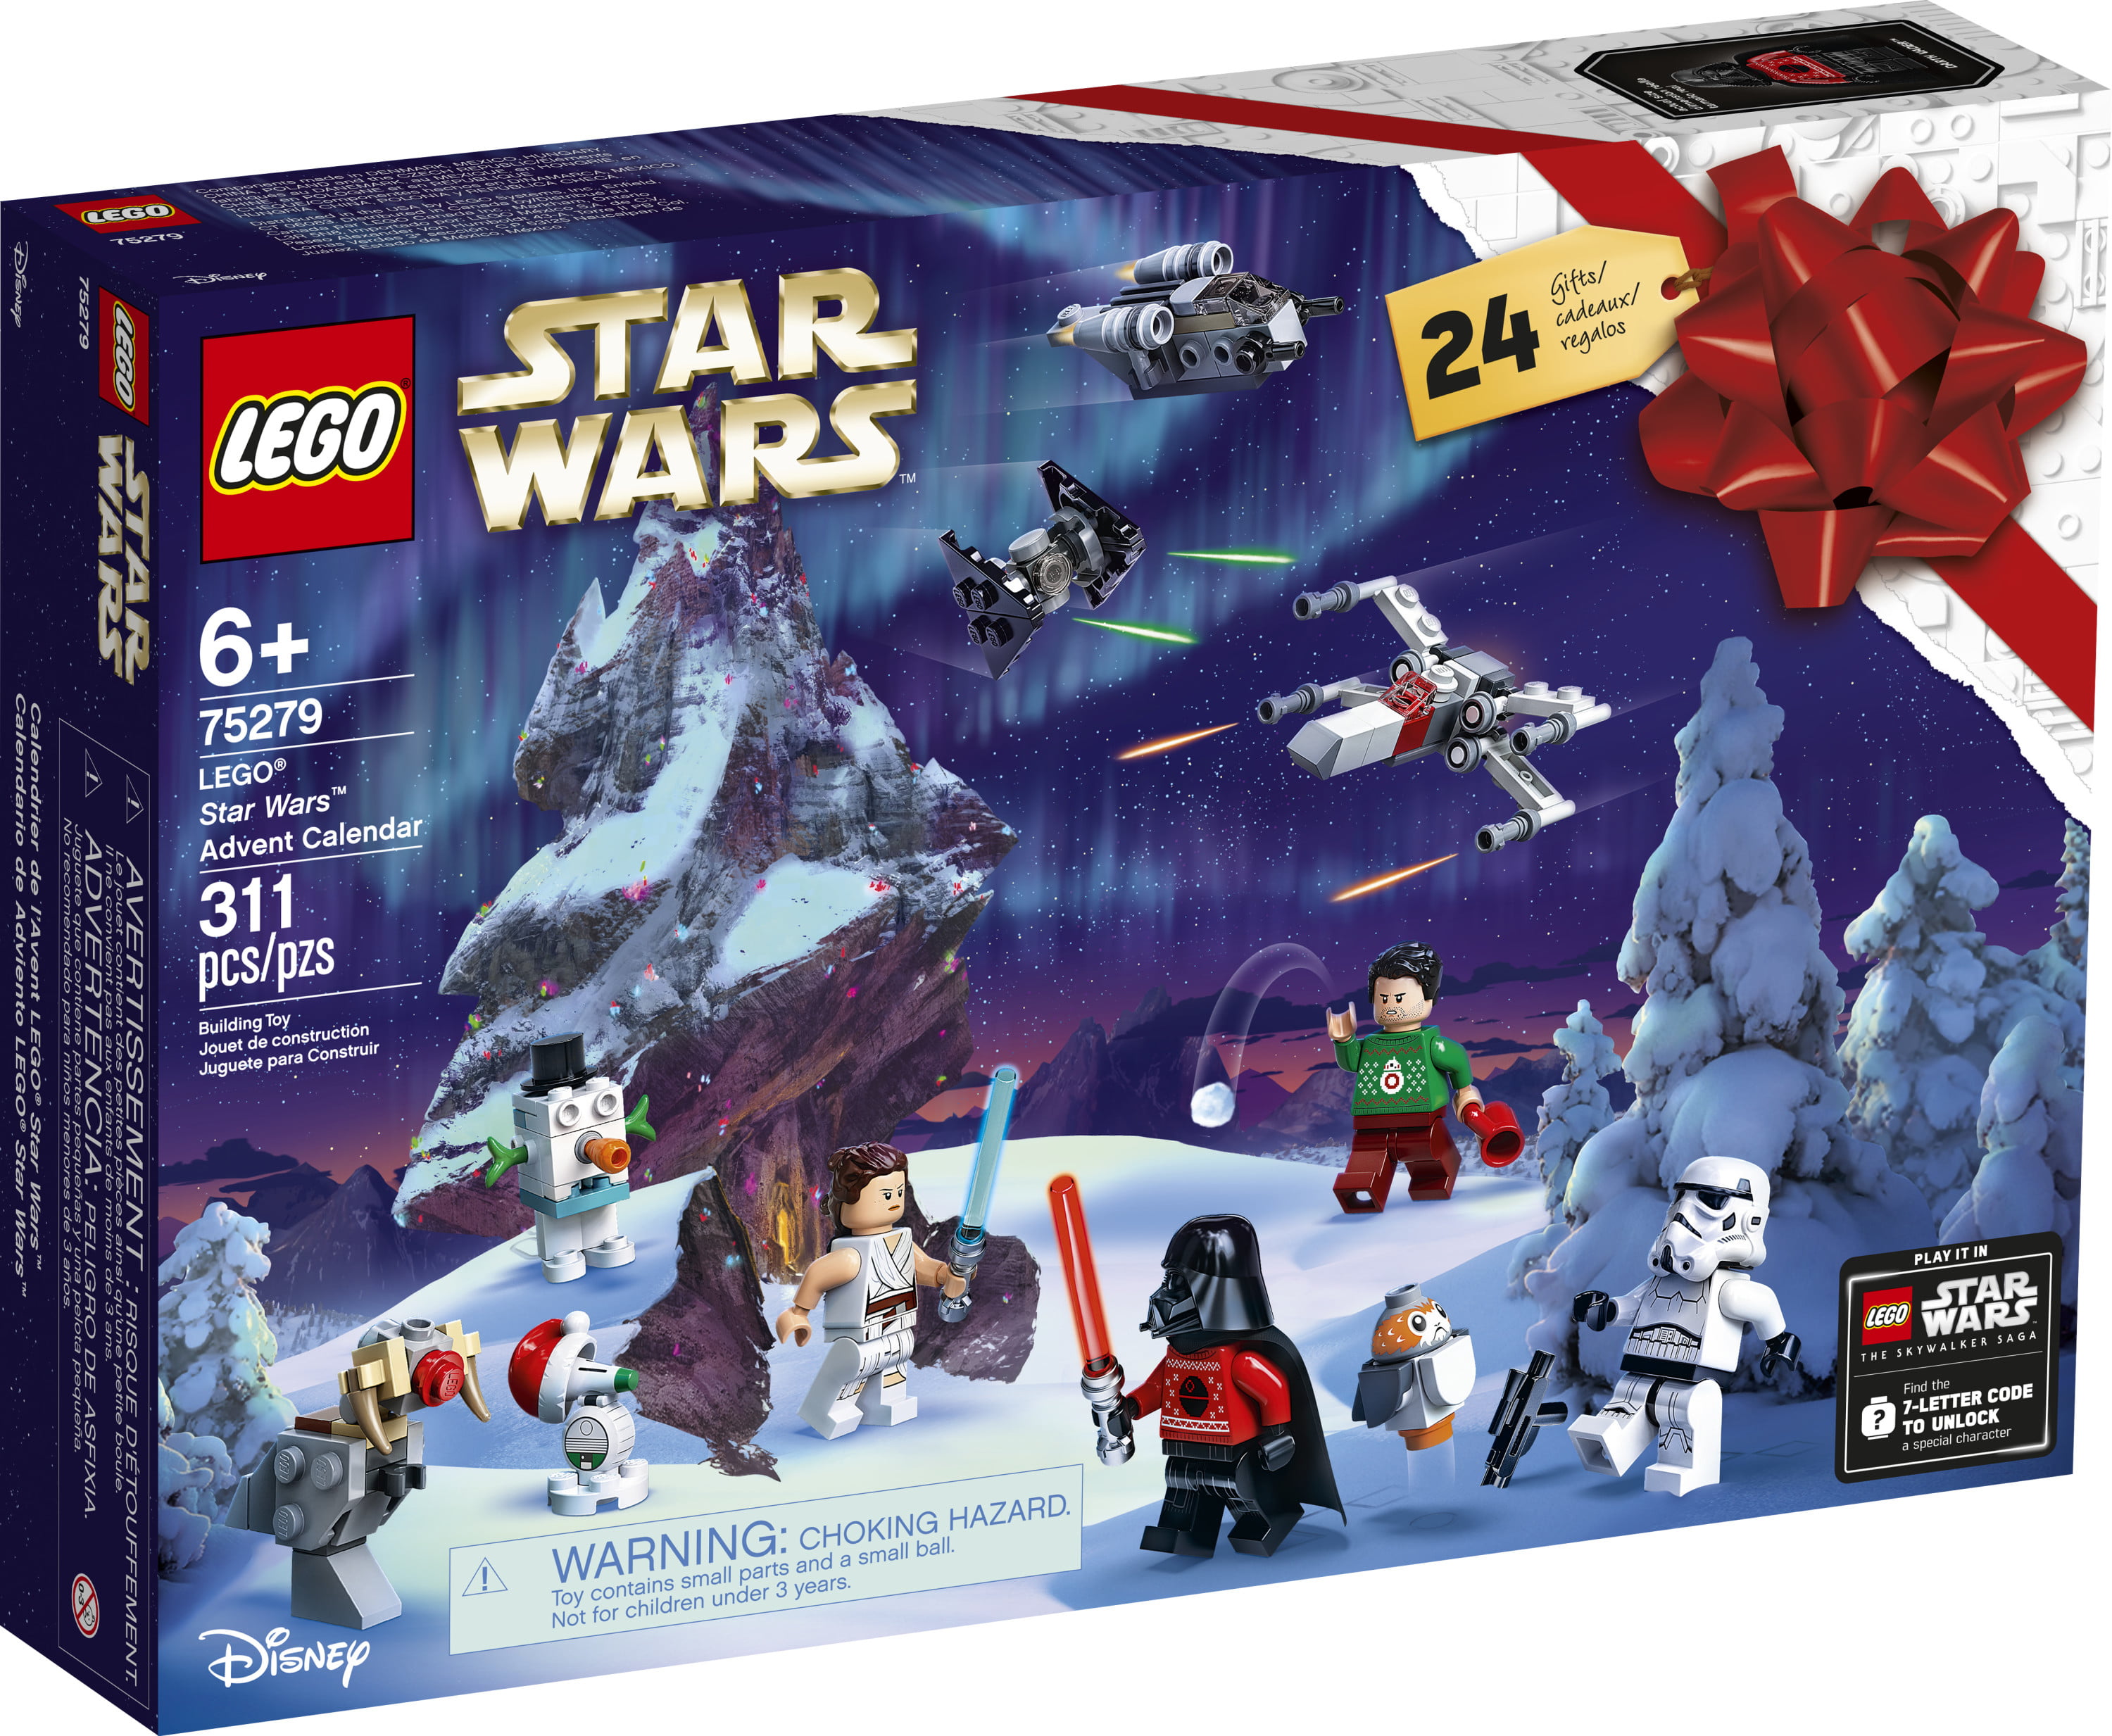 LEGO Star Wars Advent Calendar 75279 Building Kit, Fun Christmas Countdown  Calendar with Star Wars Buildable Toys (311 Pieces) 